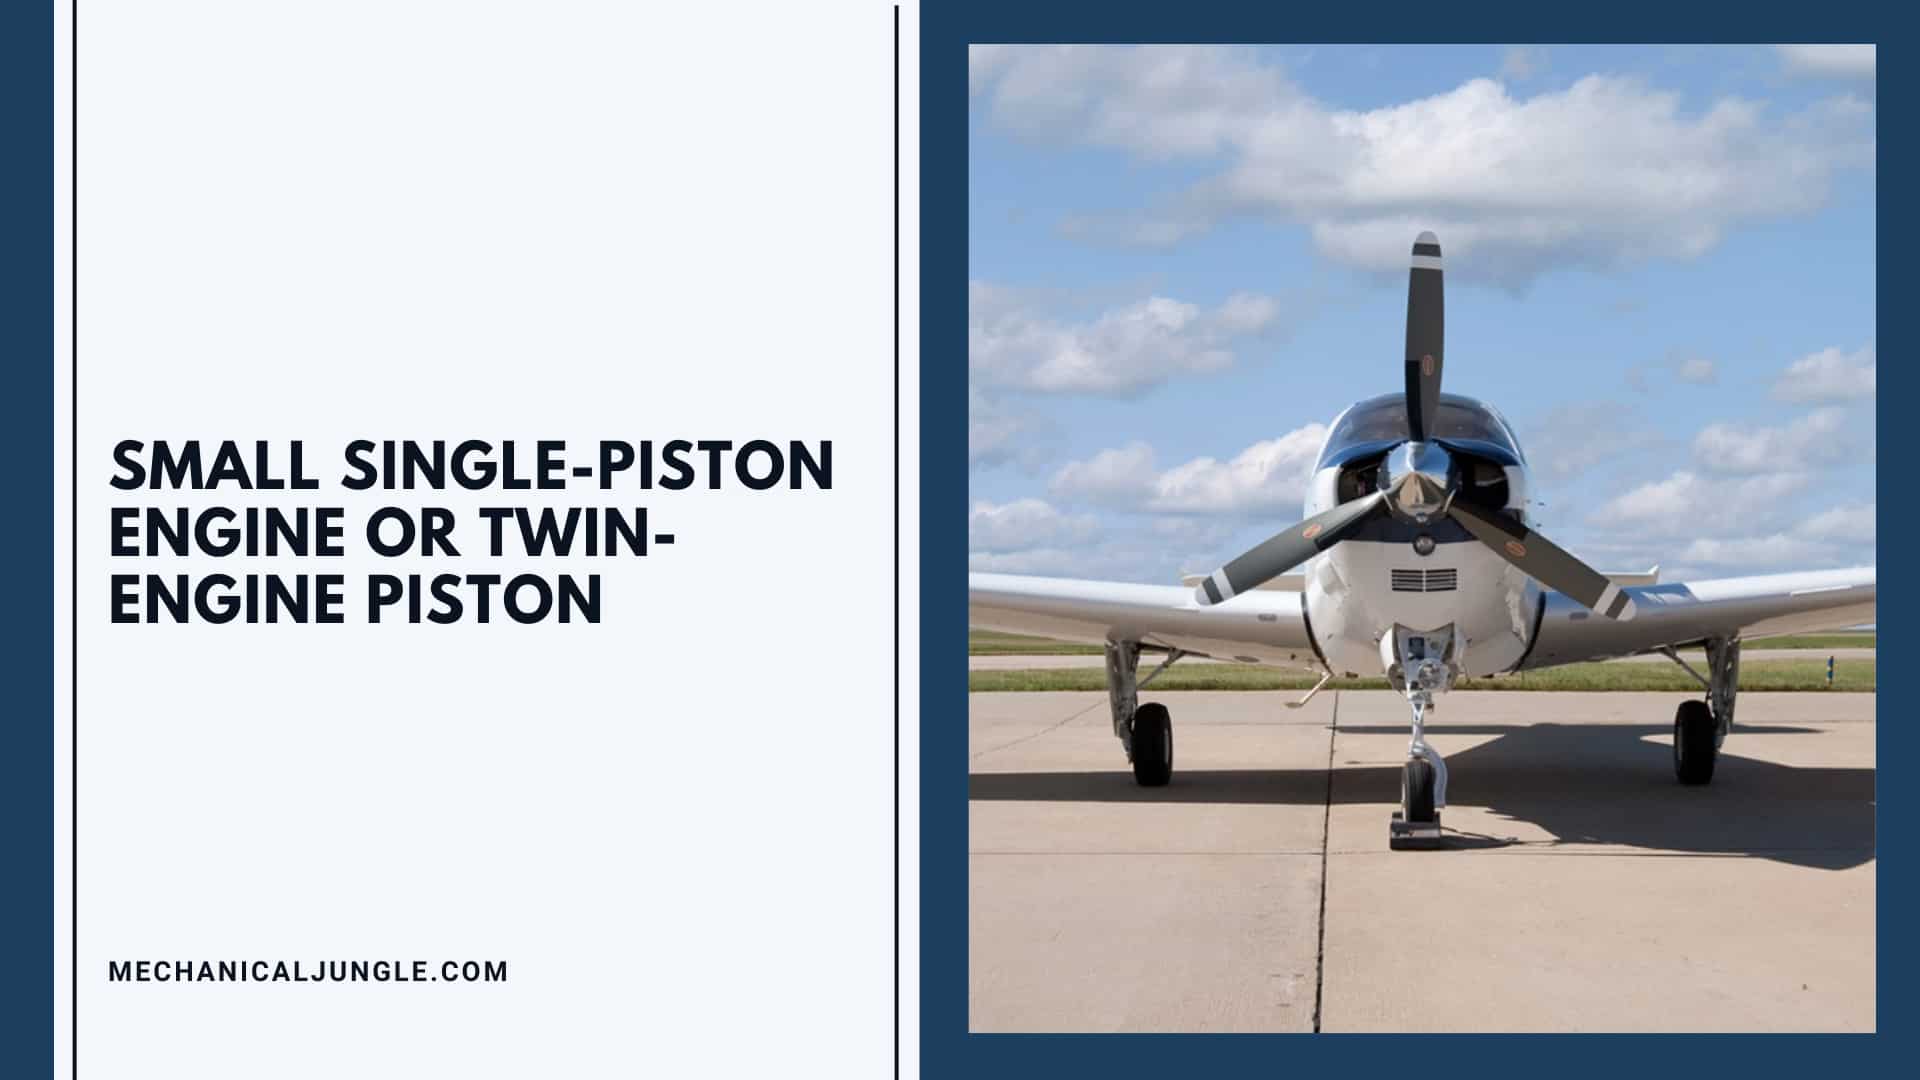 Small Single-Piston Engine or Twin-Engine Piston